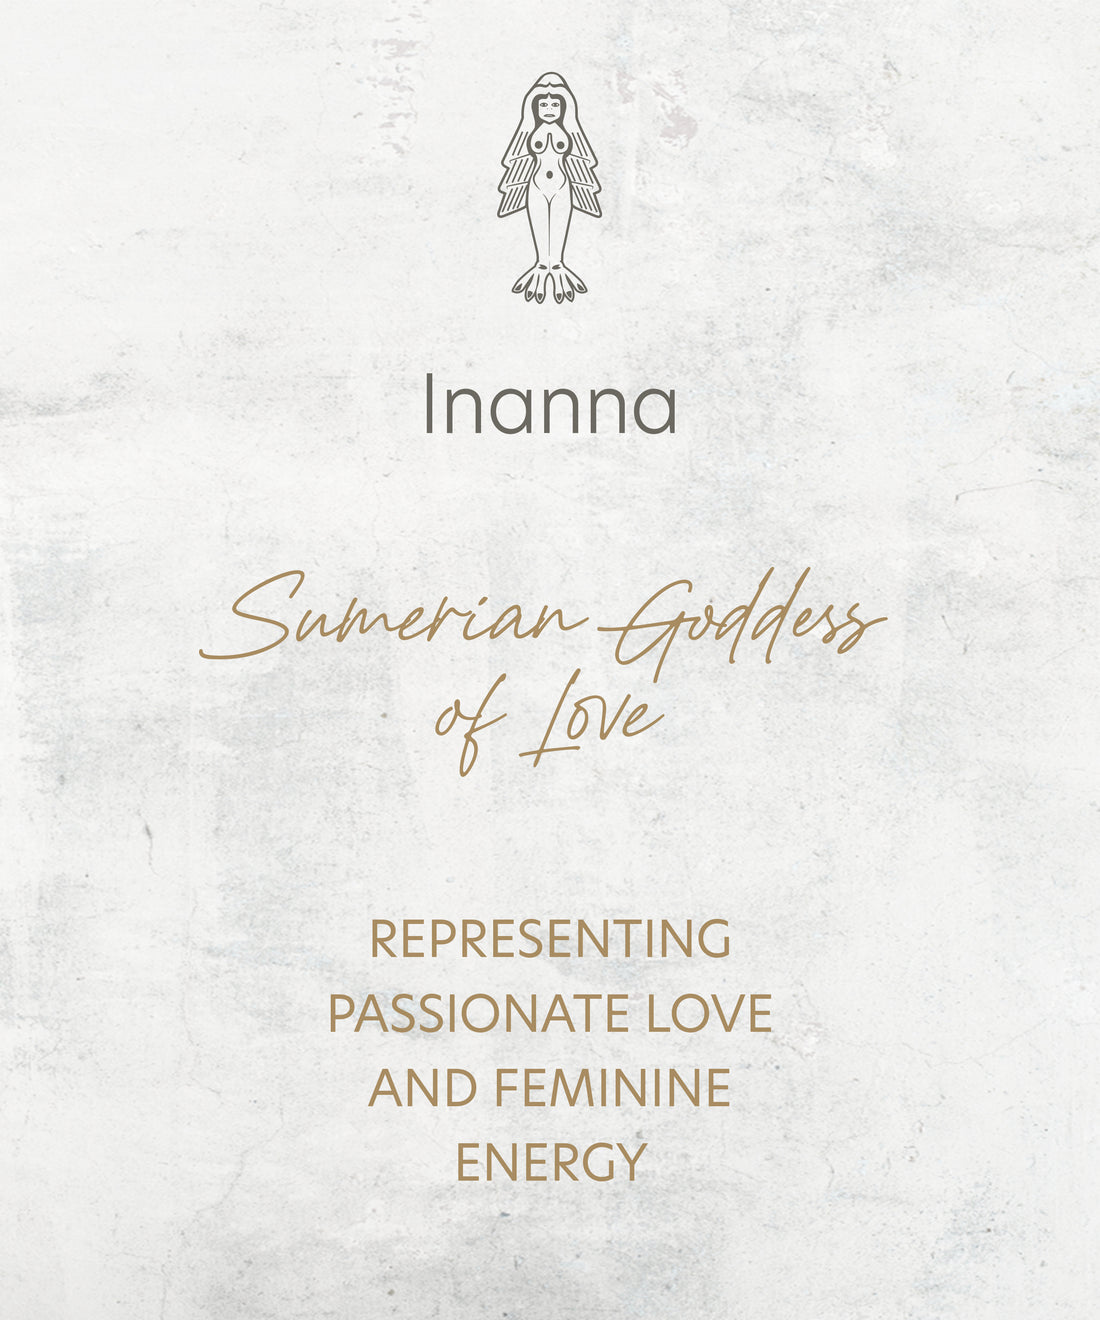 Inanna Miniature Pendant